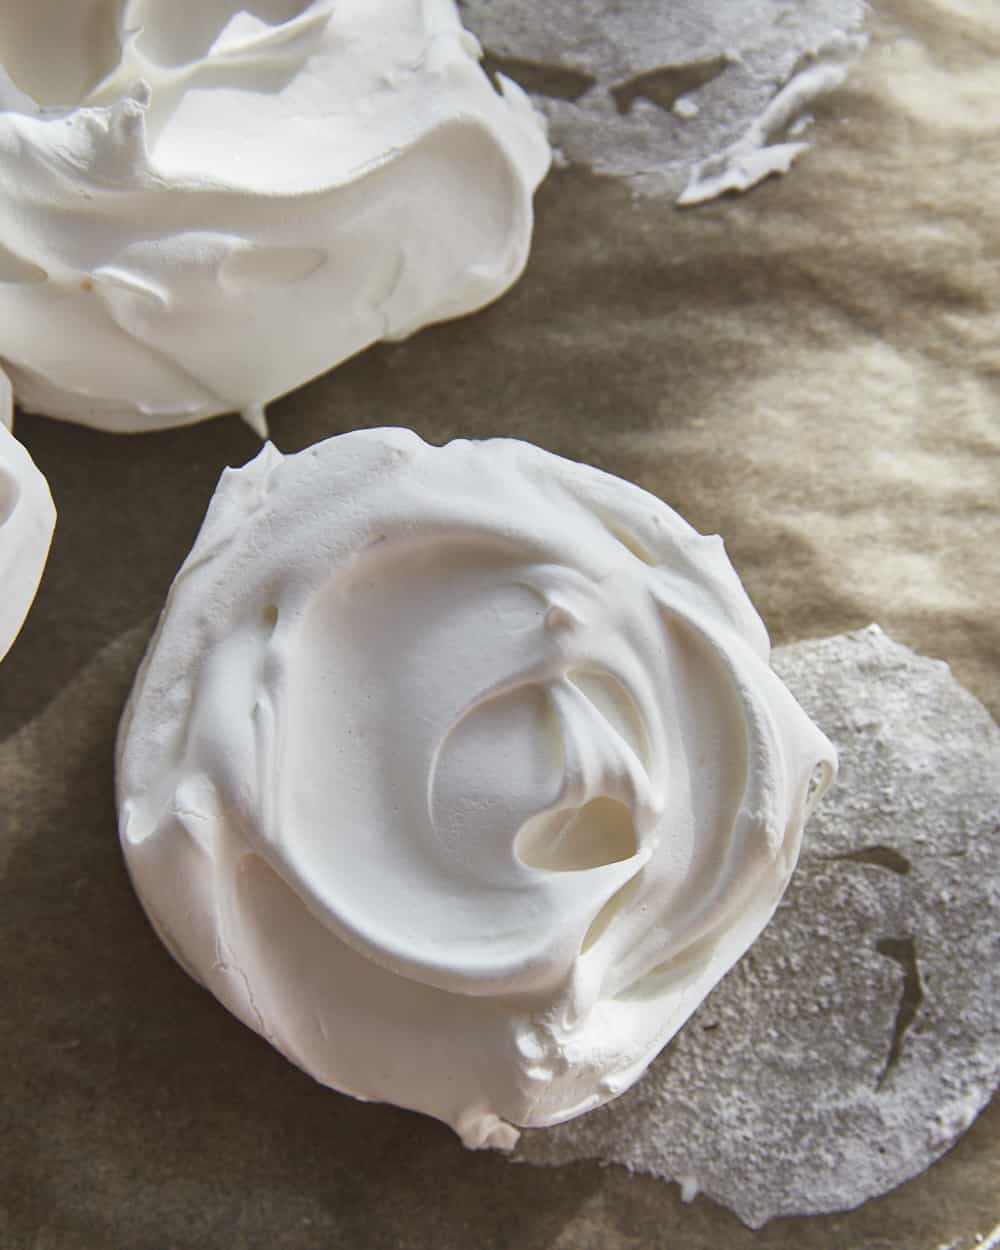 a baked meringue